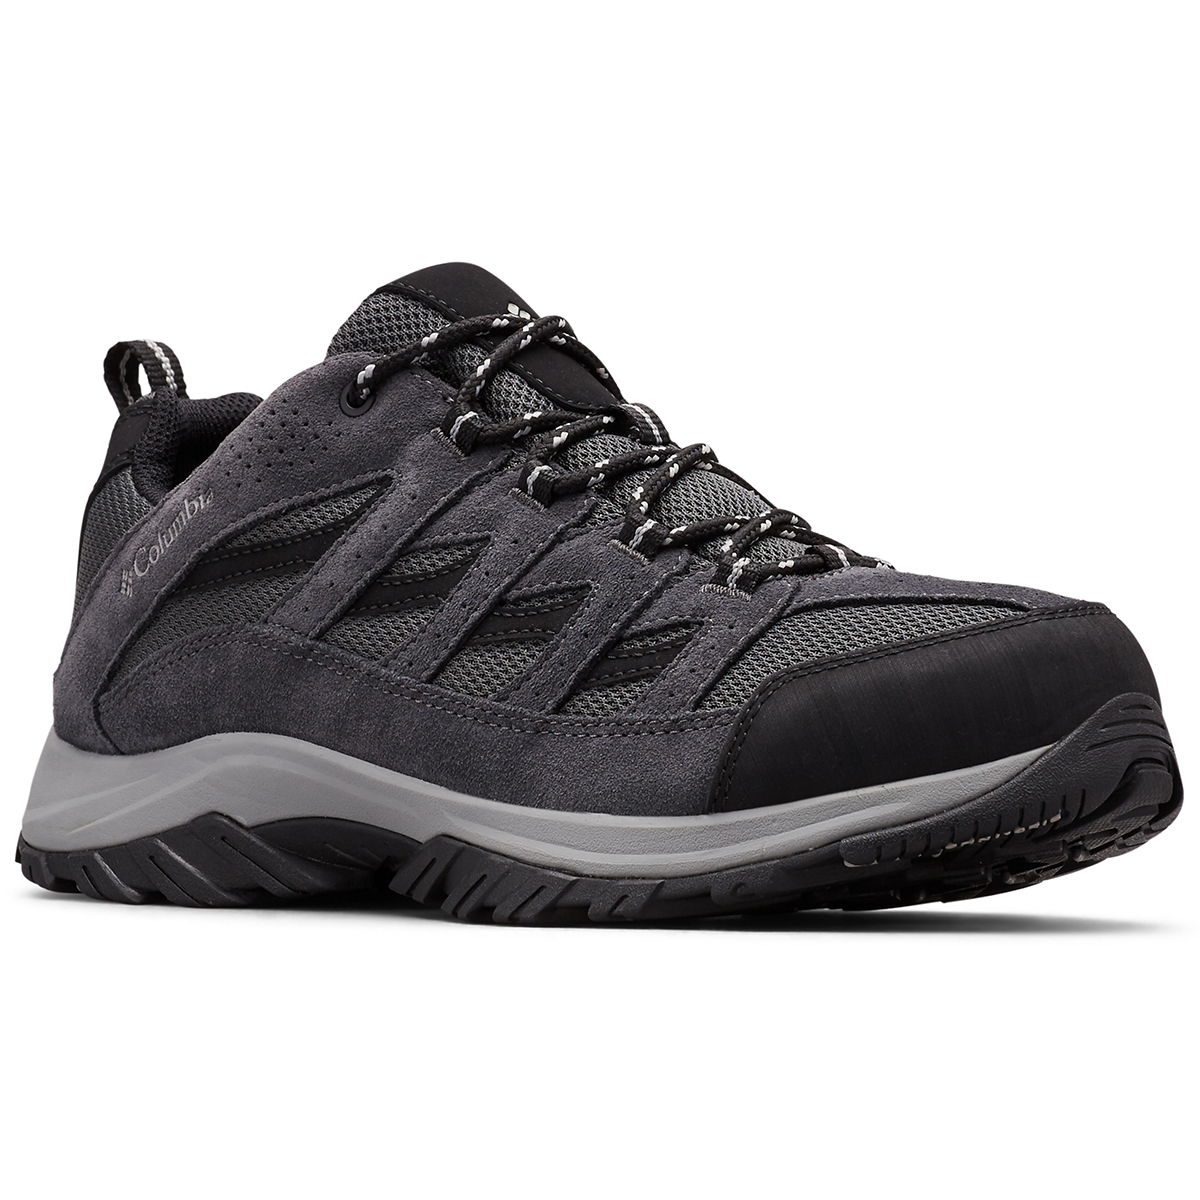 Columbia Men's Crestwood Hiking Shoe - Size 12